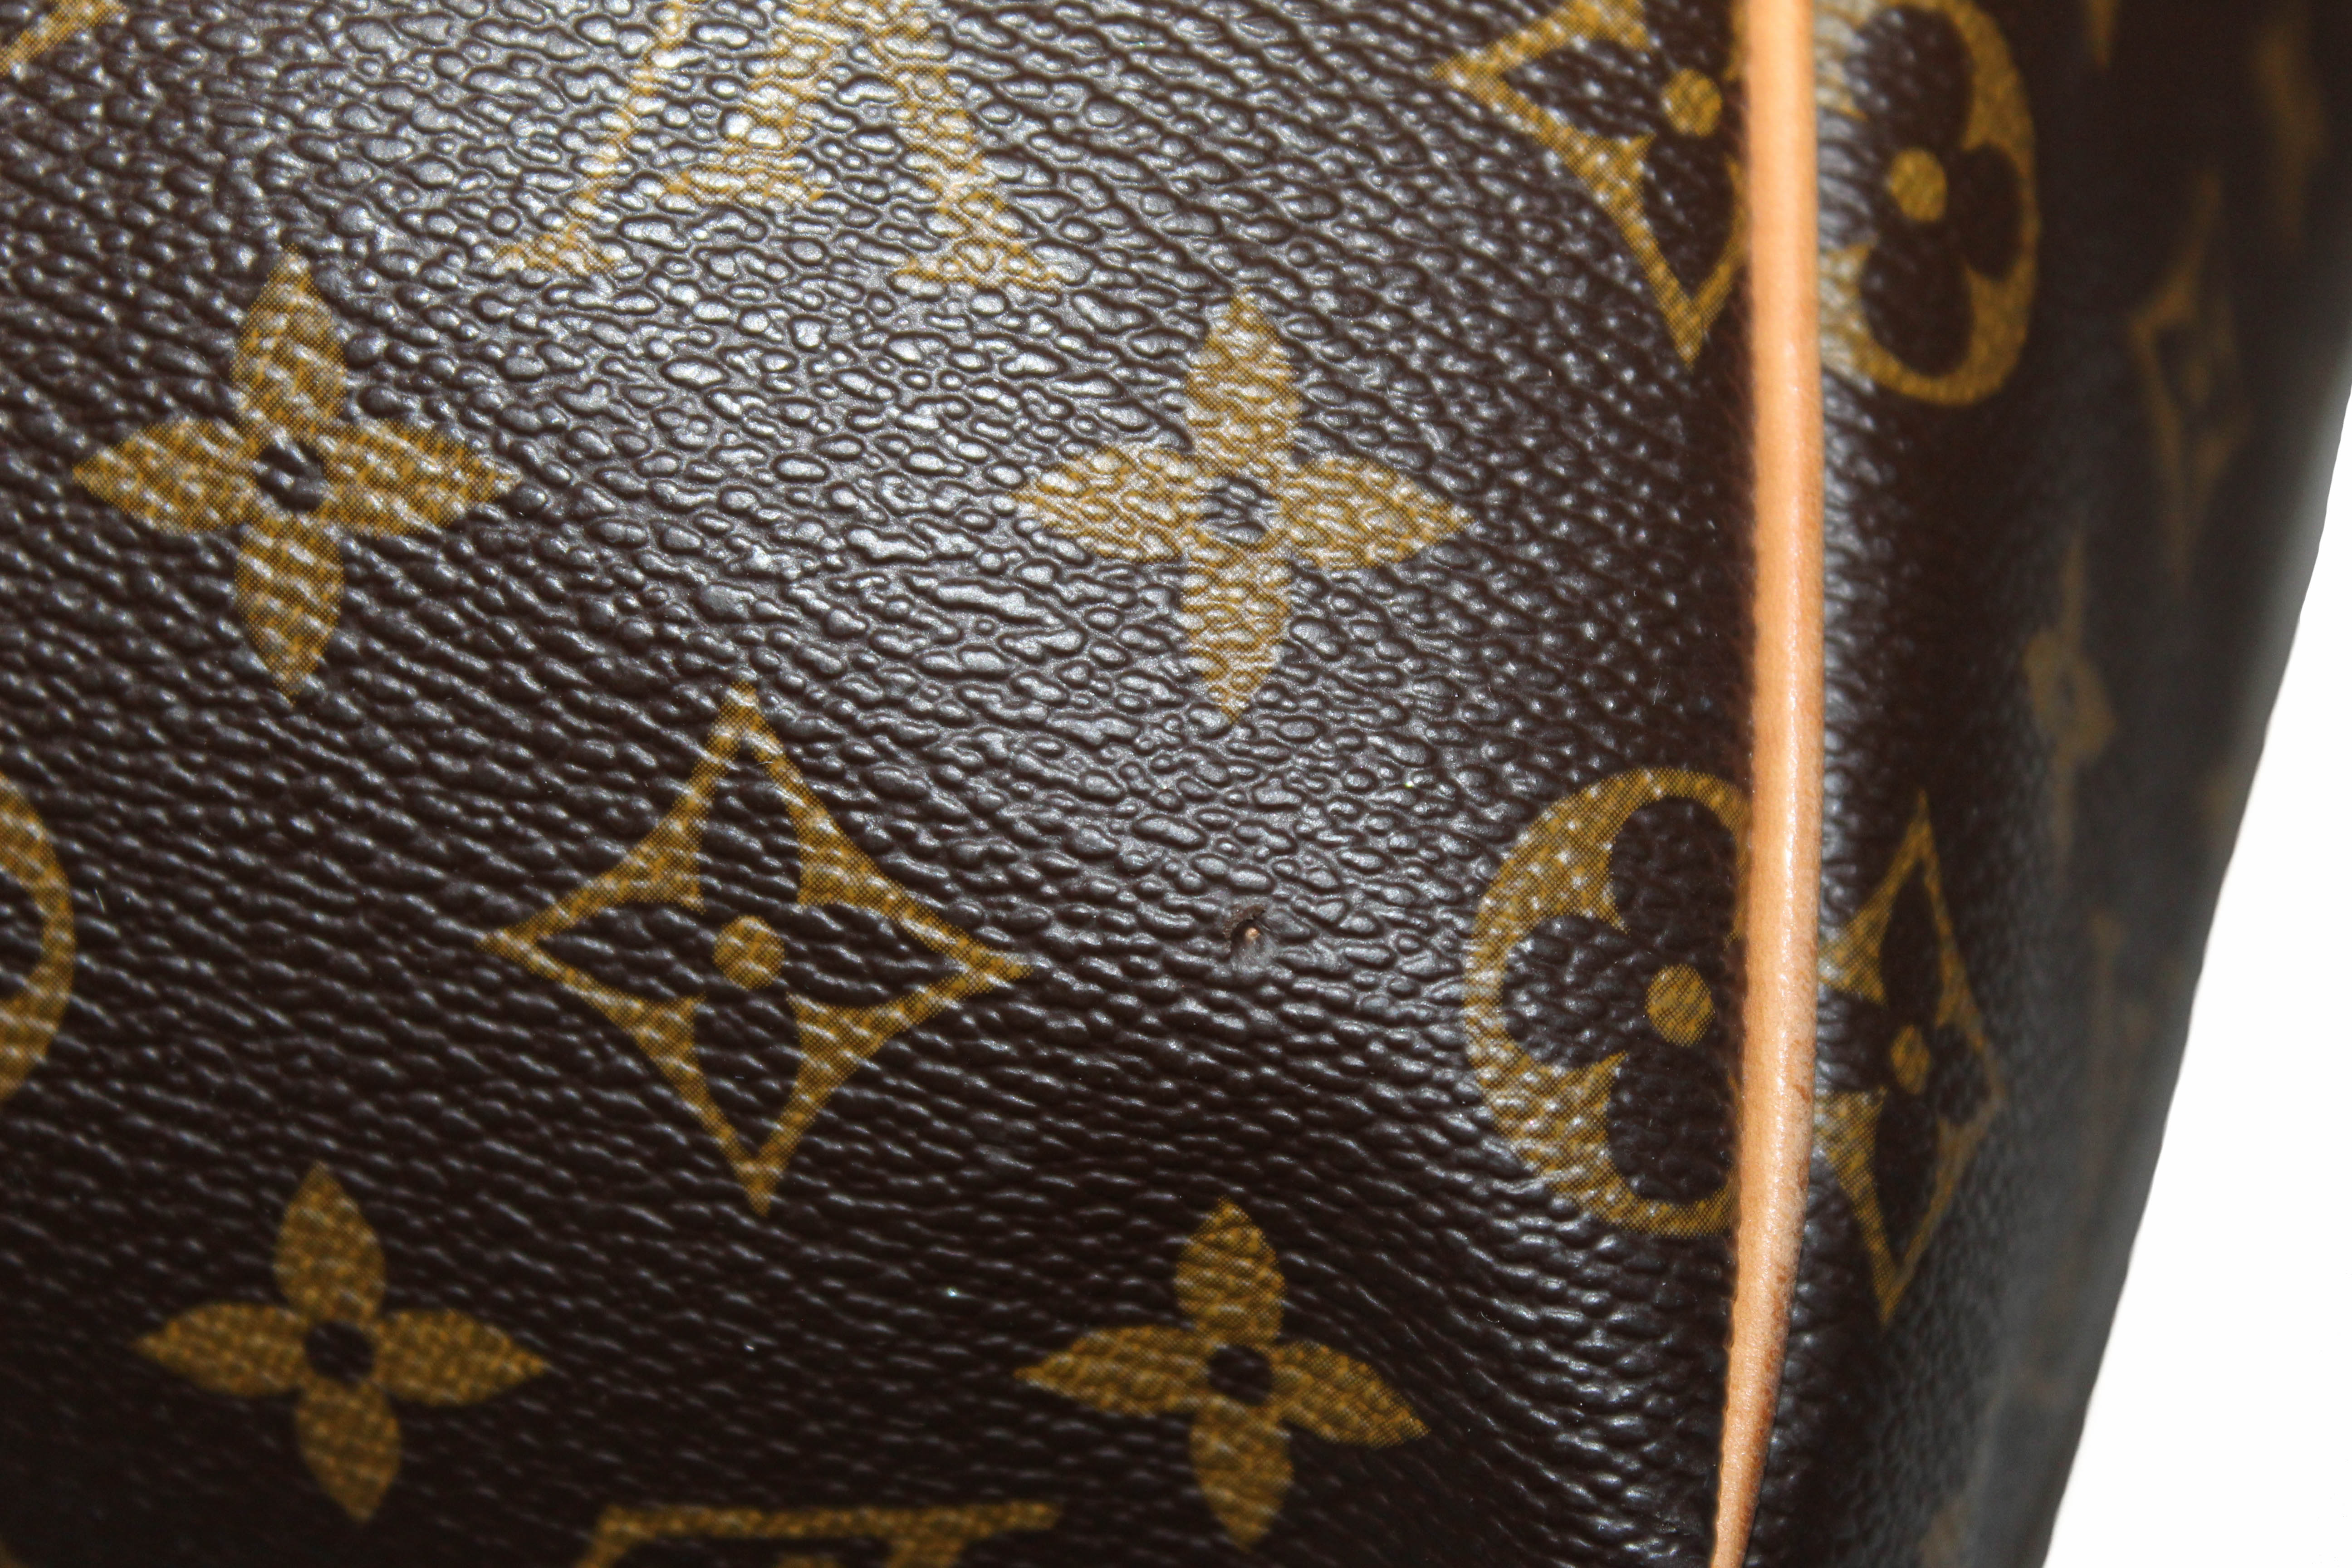 Authentic Louis Vuitton Classic Monogram Keepall 55 Travel Bag